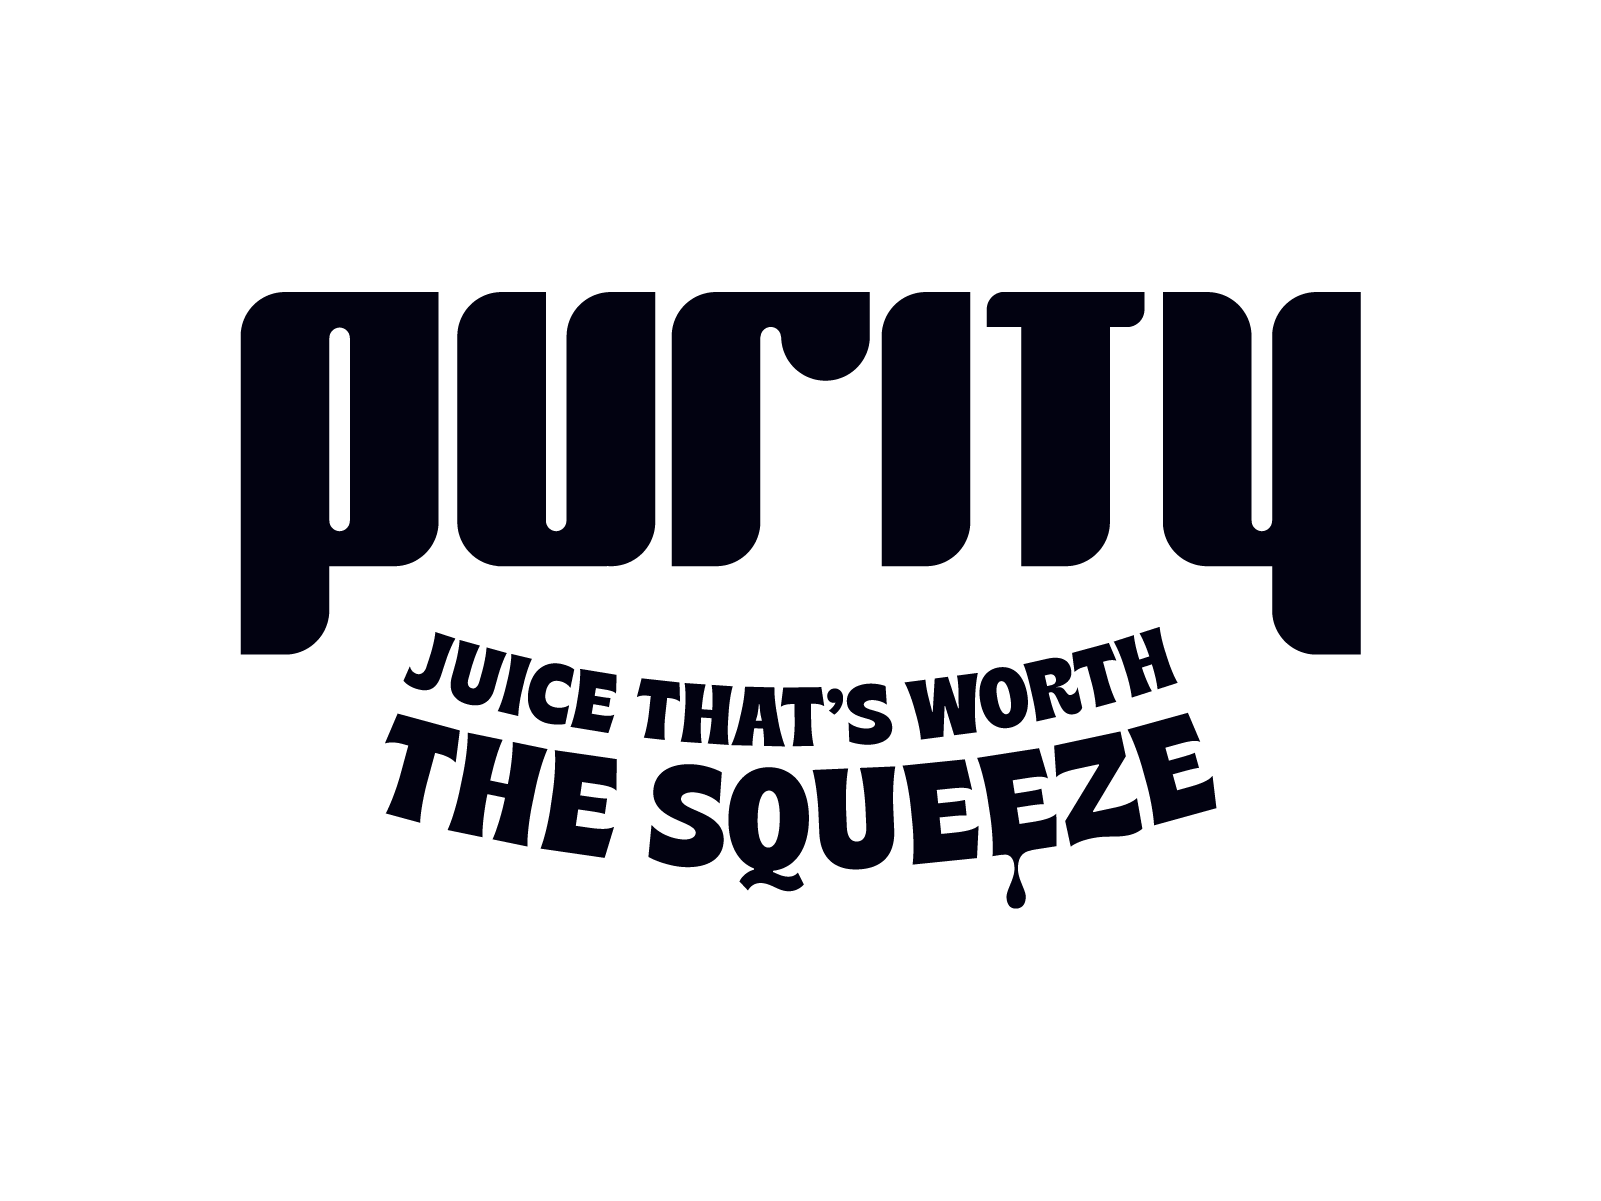 Purity Logo